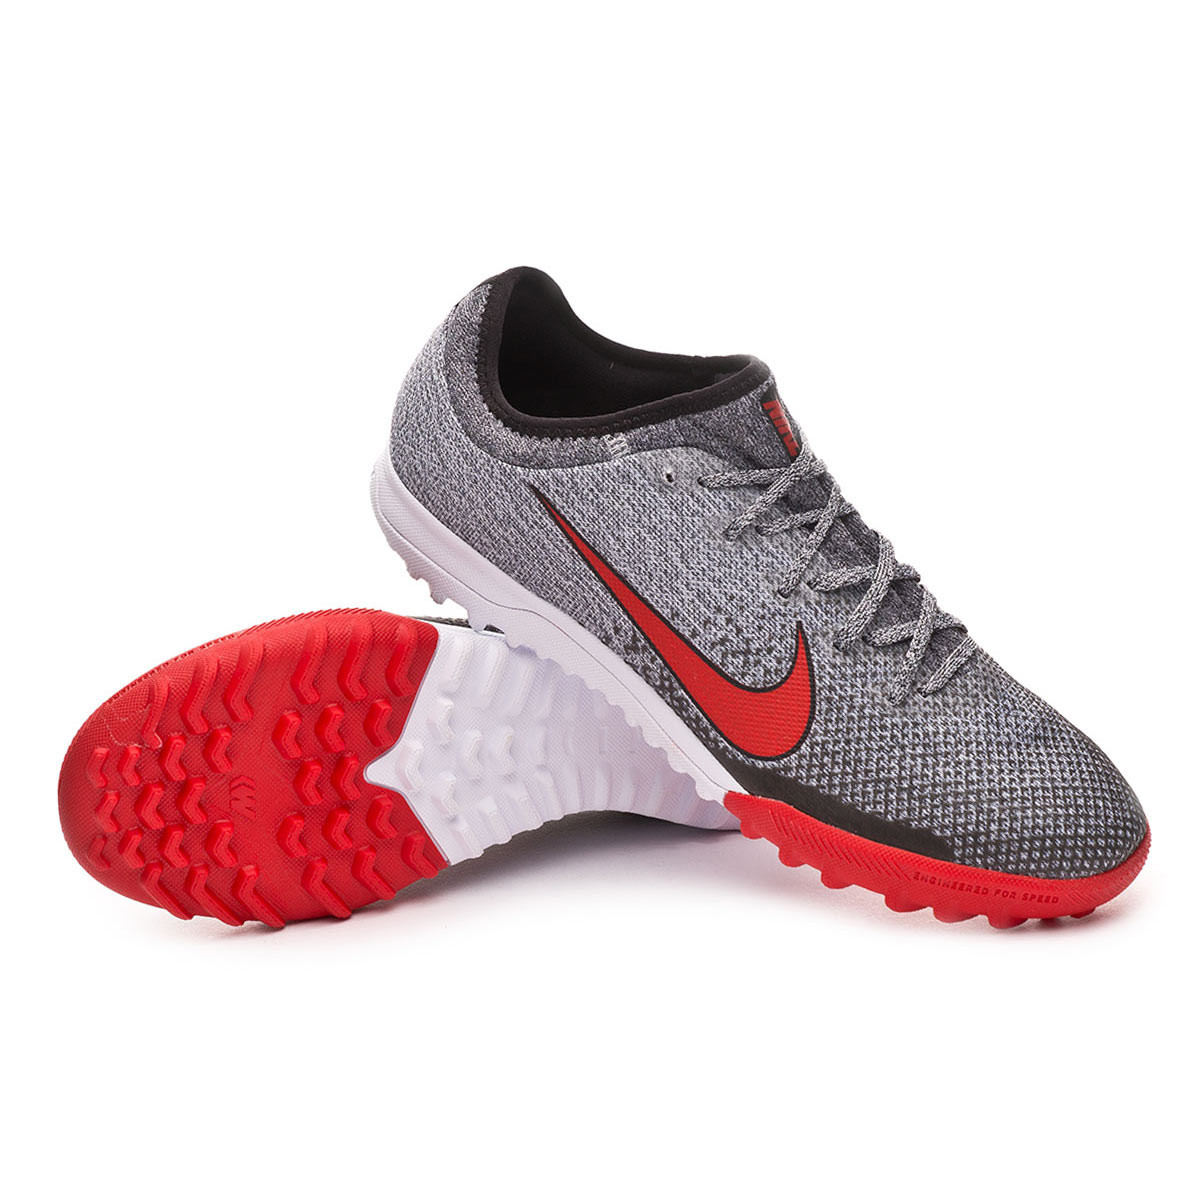 Nike Mercurial Vapor VIII CR Pro SG (Men's) Best Price